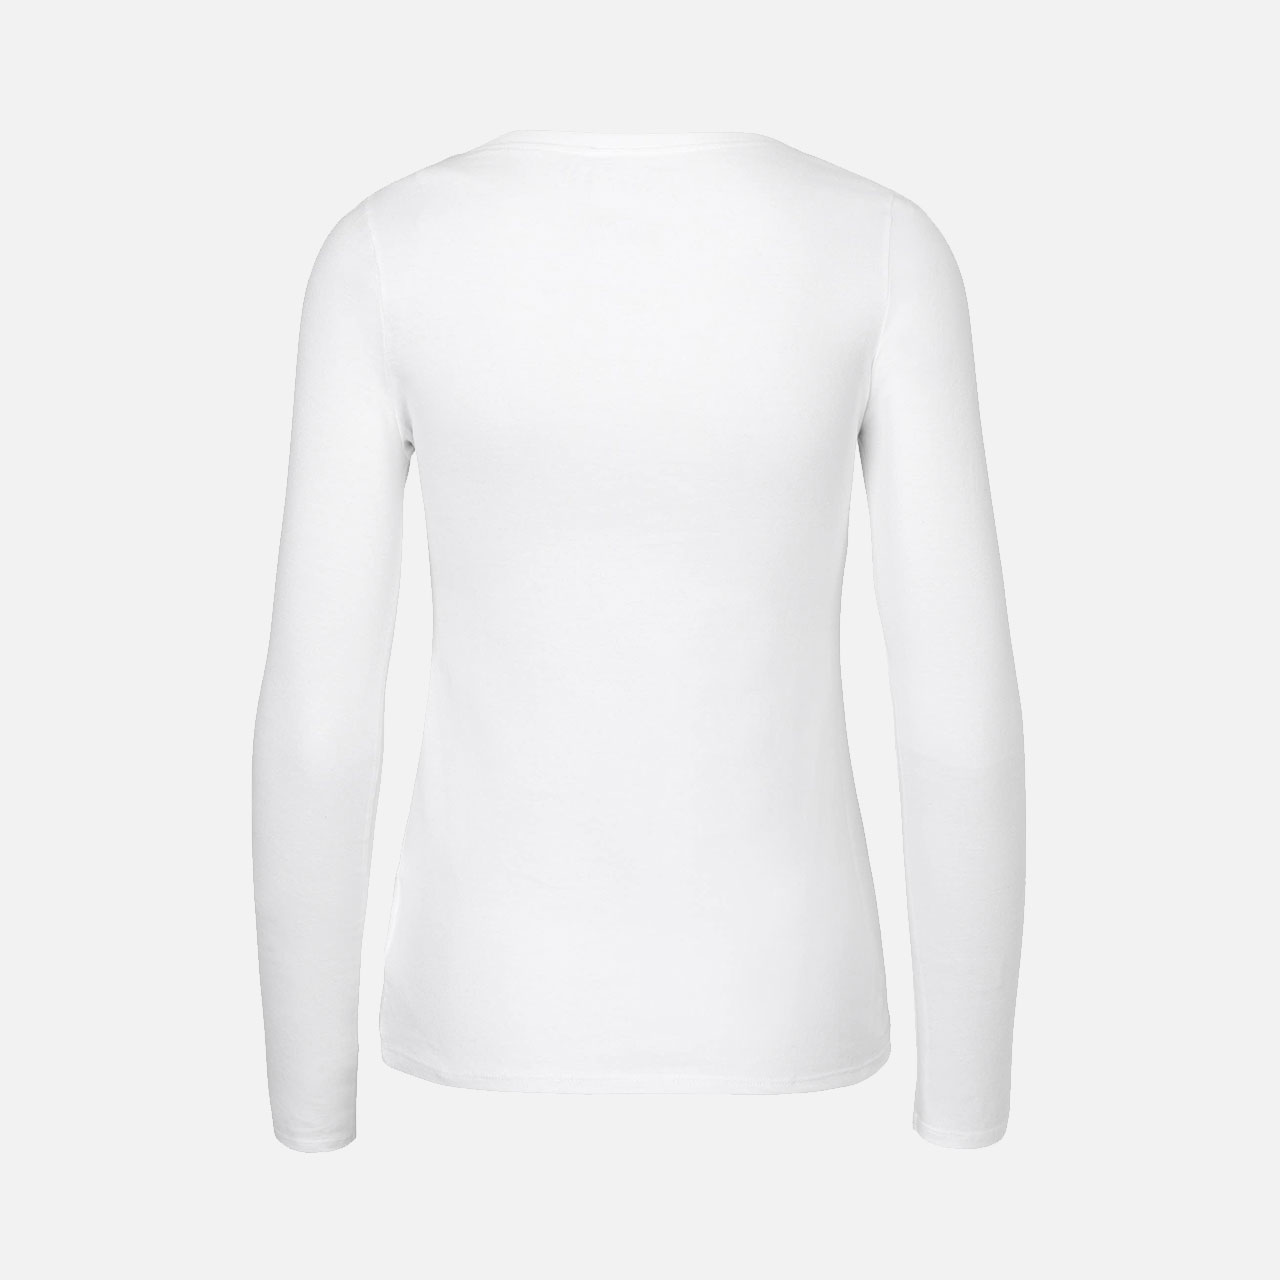 Doppelpack Ladies Long Sleeve Shirt - Bio Baumwolle Weiss Weiß 2XL